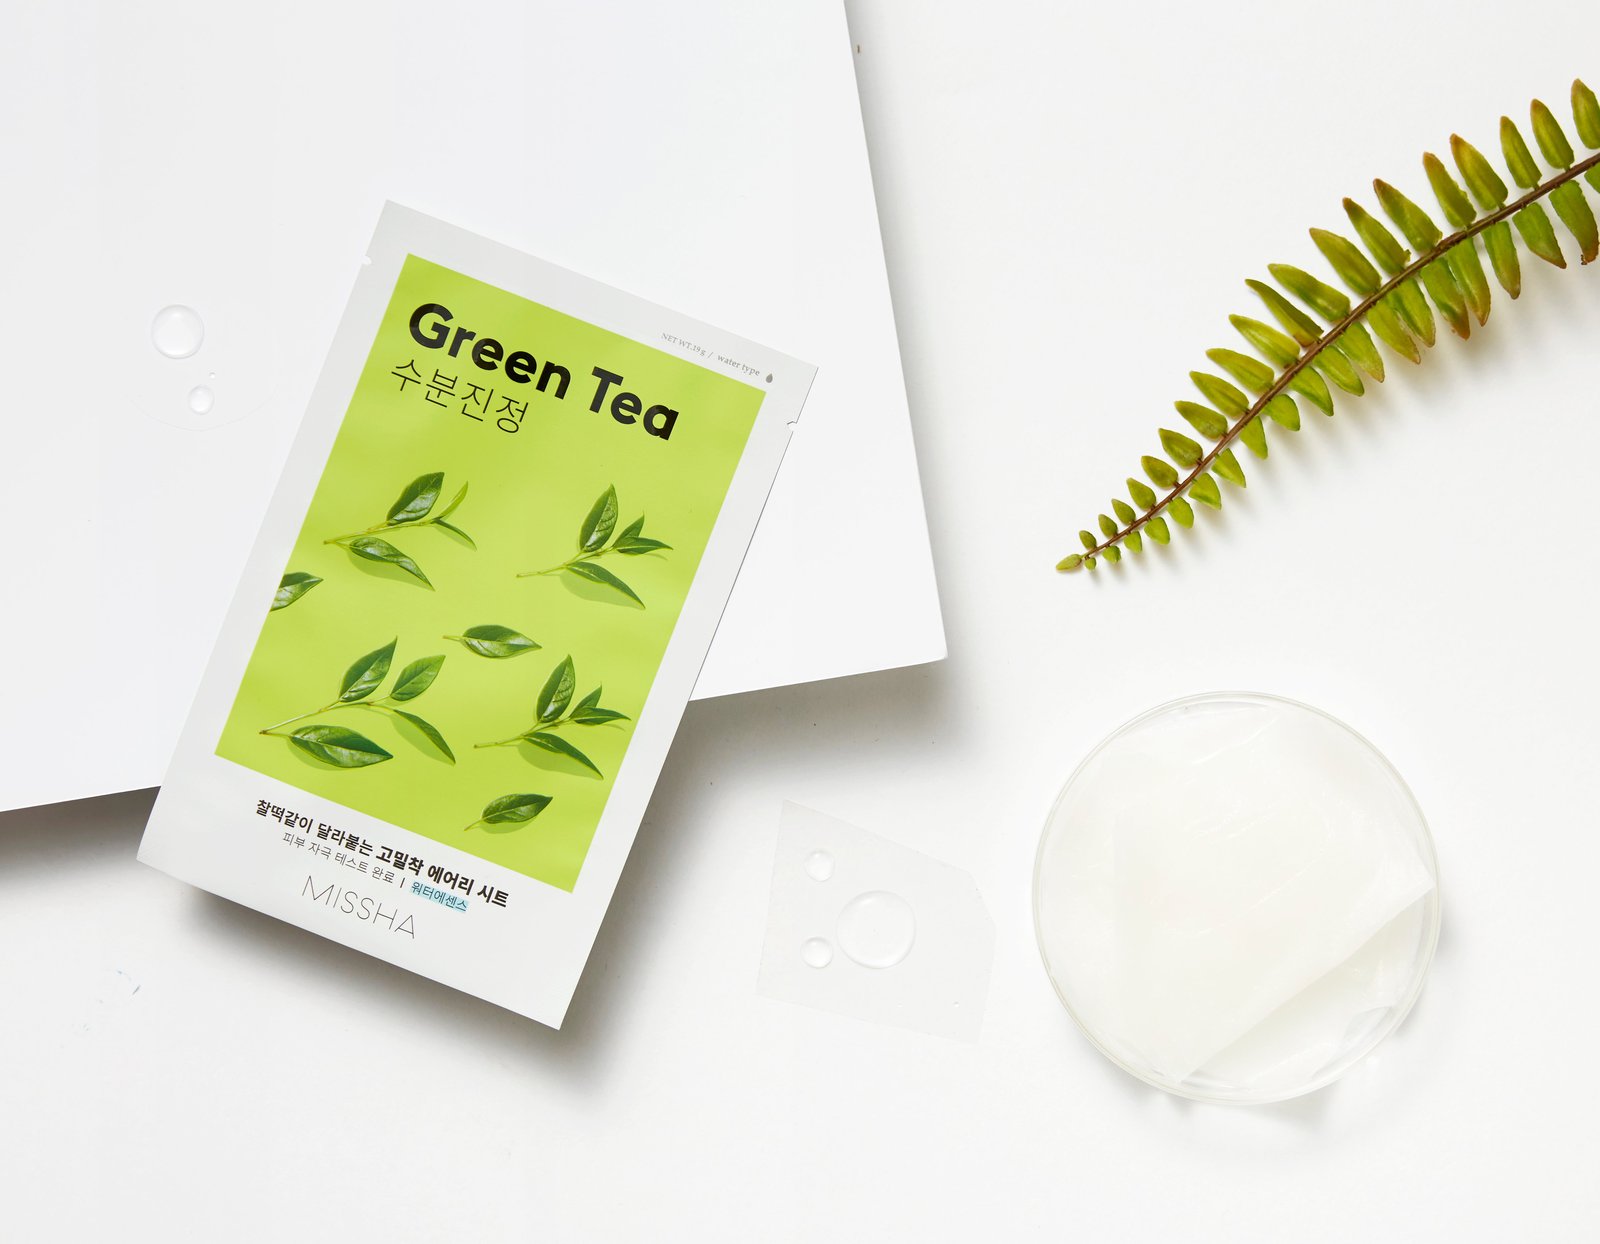 MISSHA Green Tea Airy Fit  Sheet Mask 1 st